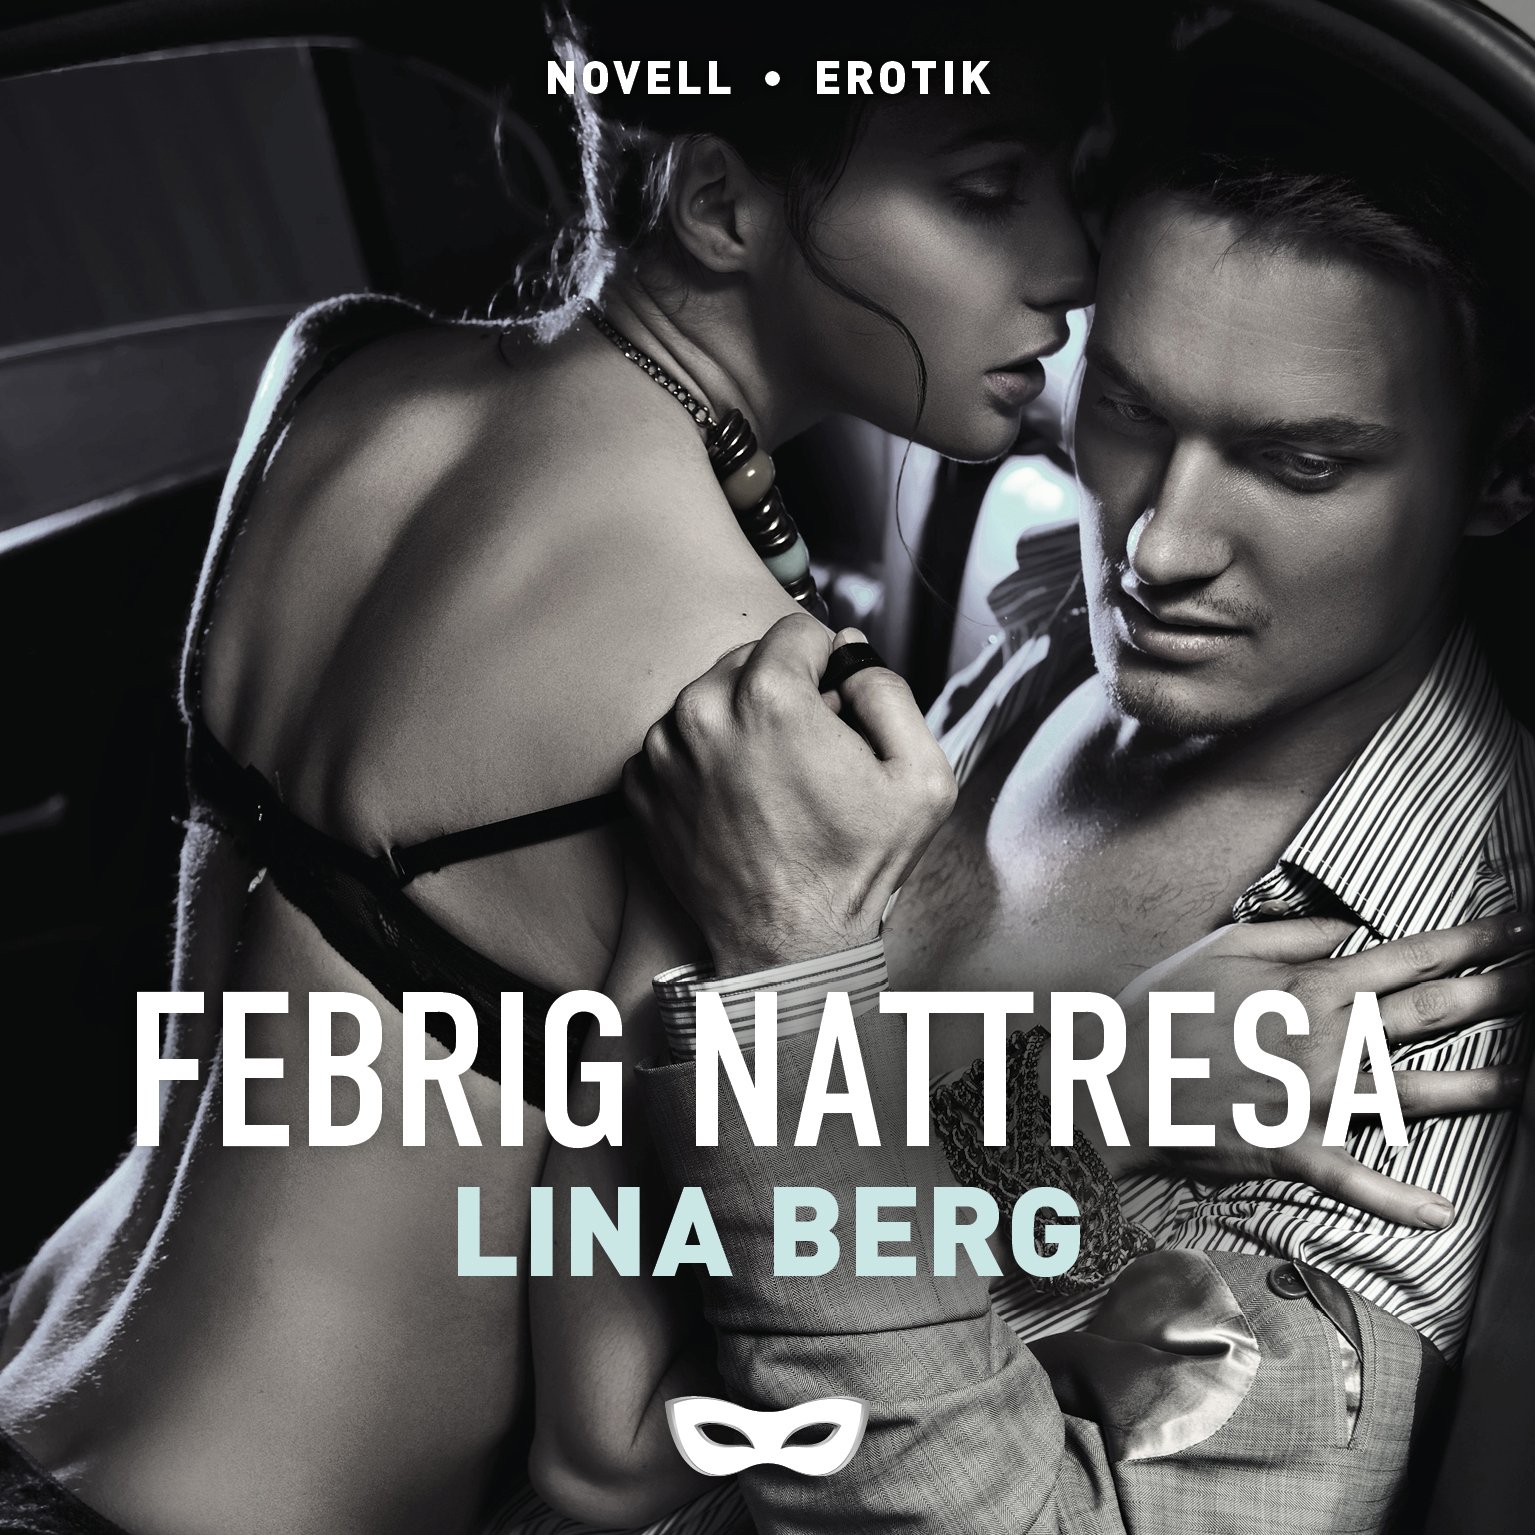 Lina Berg